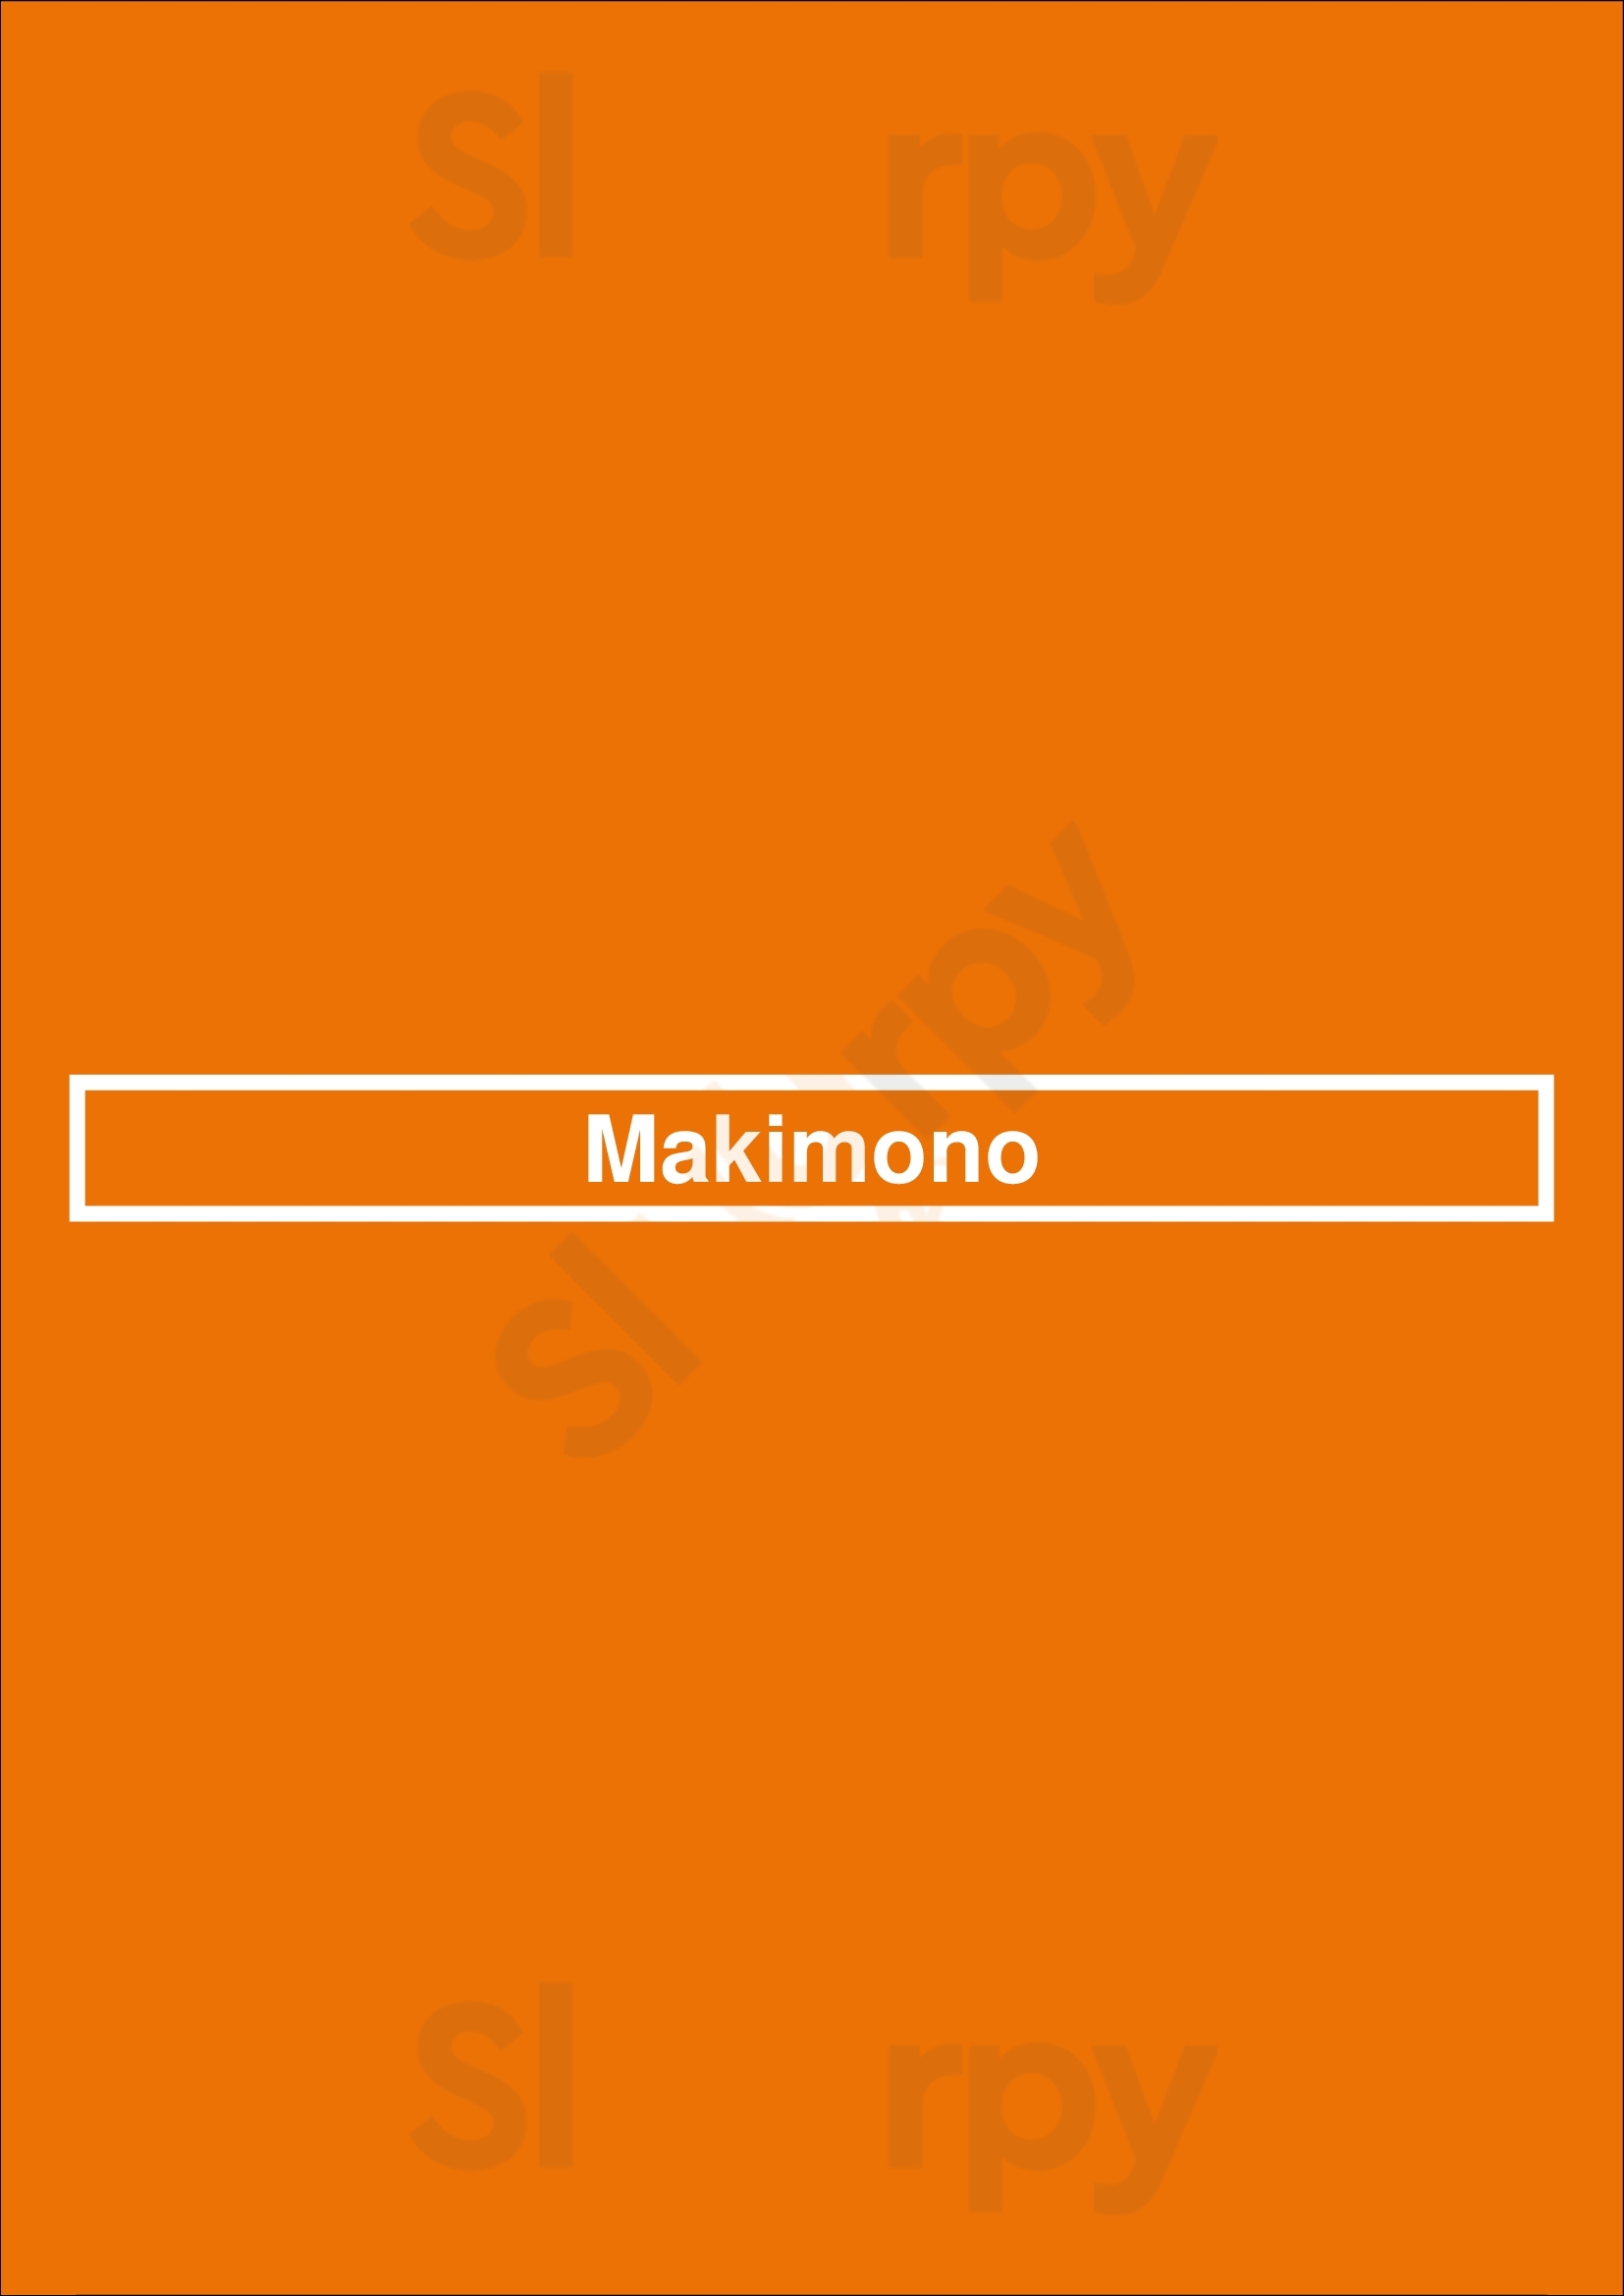 Makimono Pickering Menu - 1